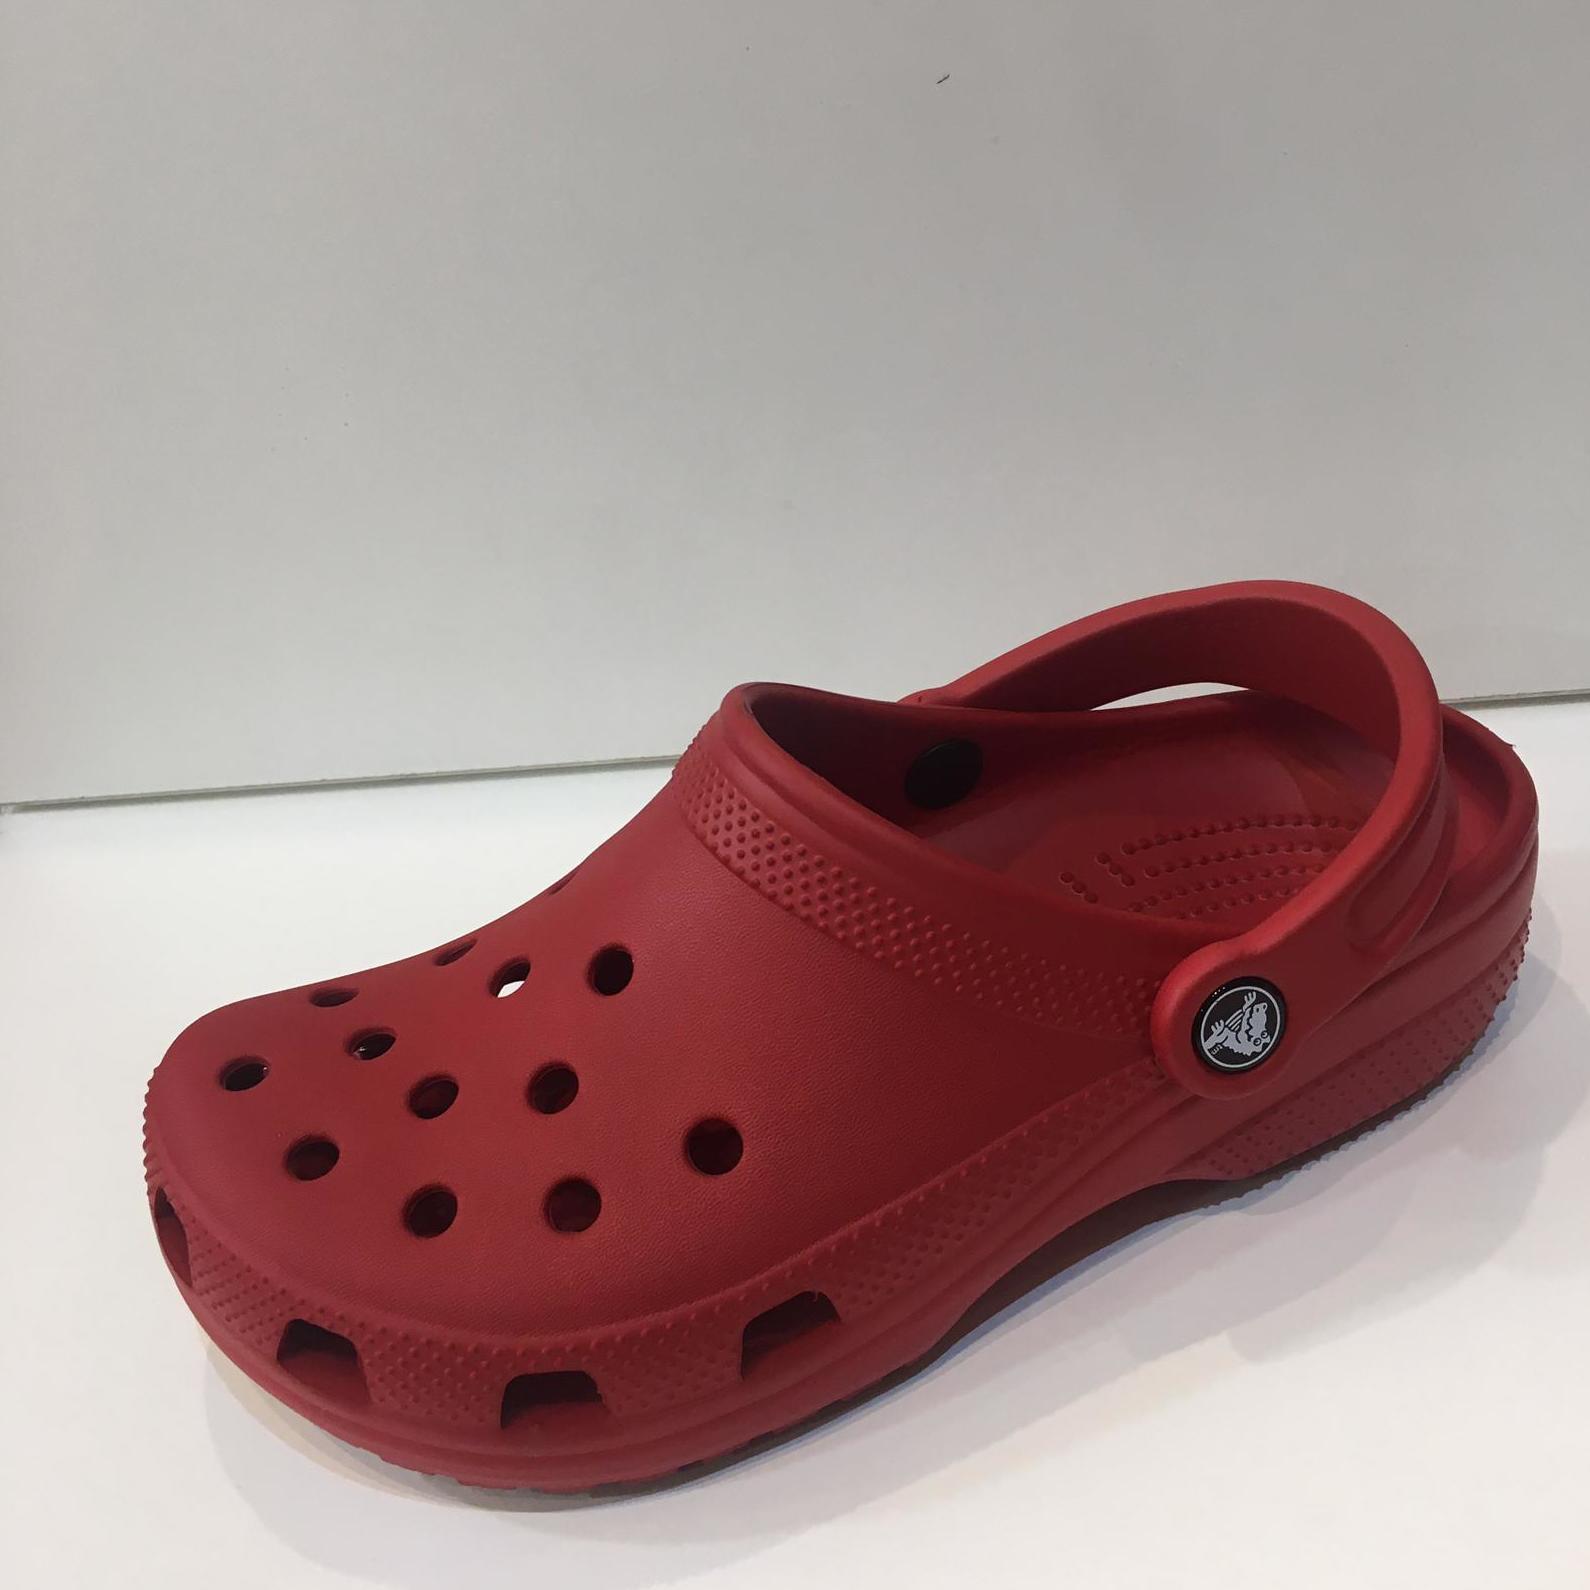 Crocs Junior model basic, color vermell 29.90€